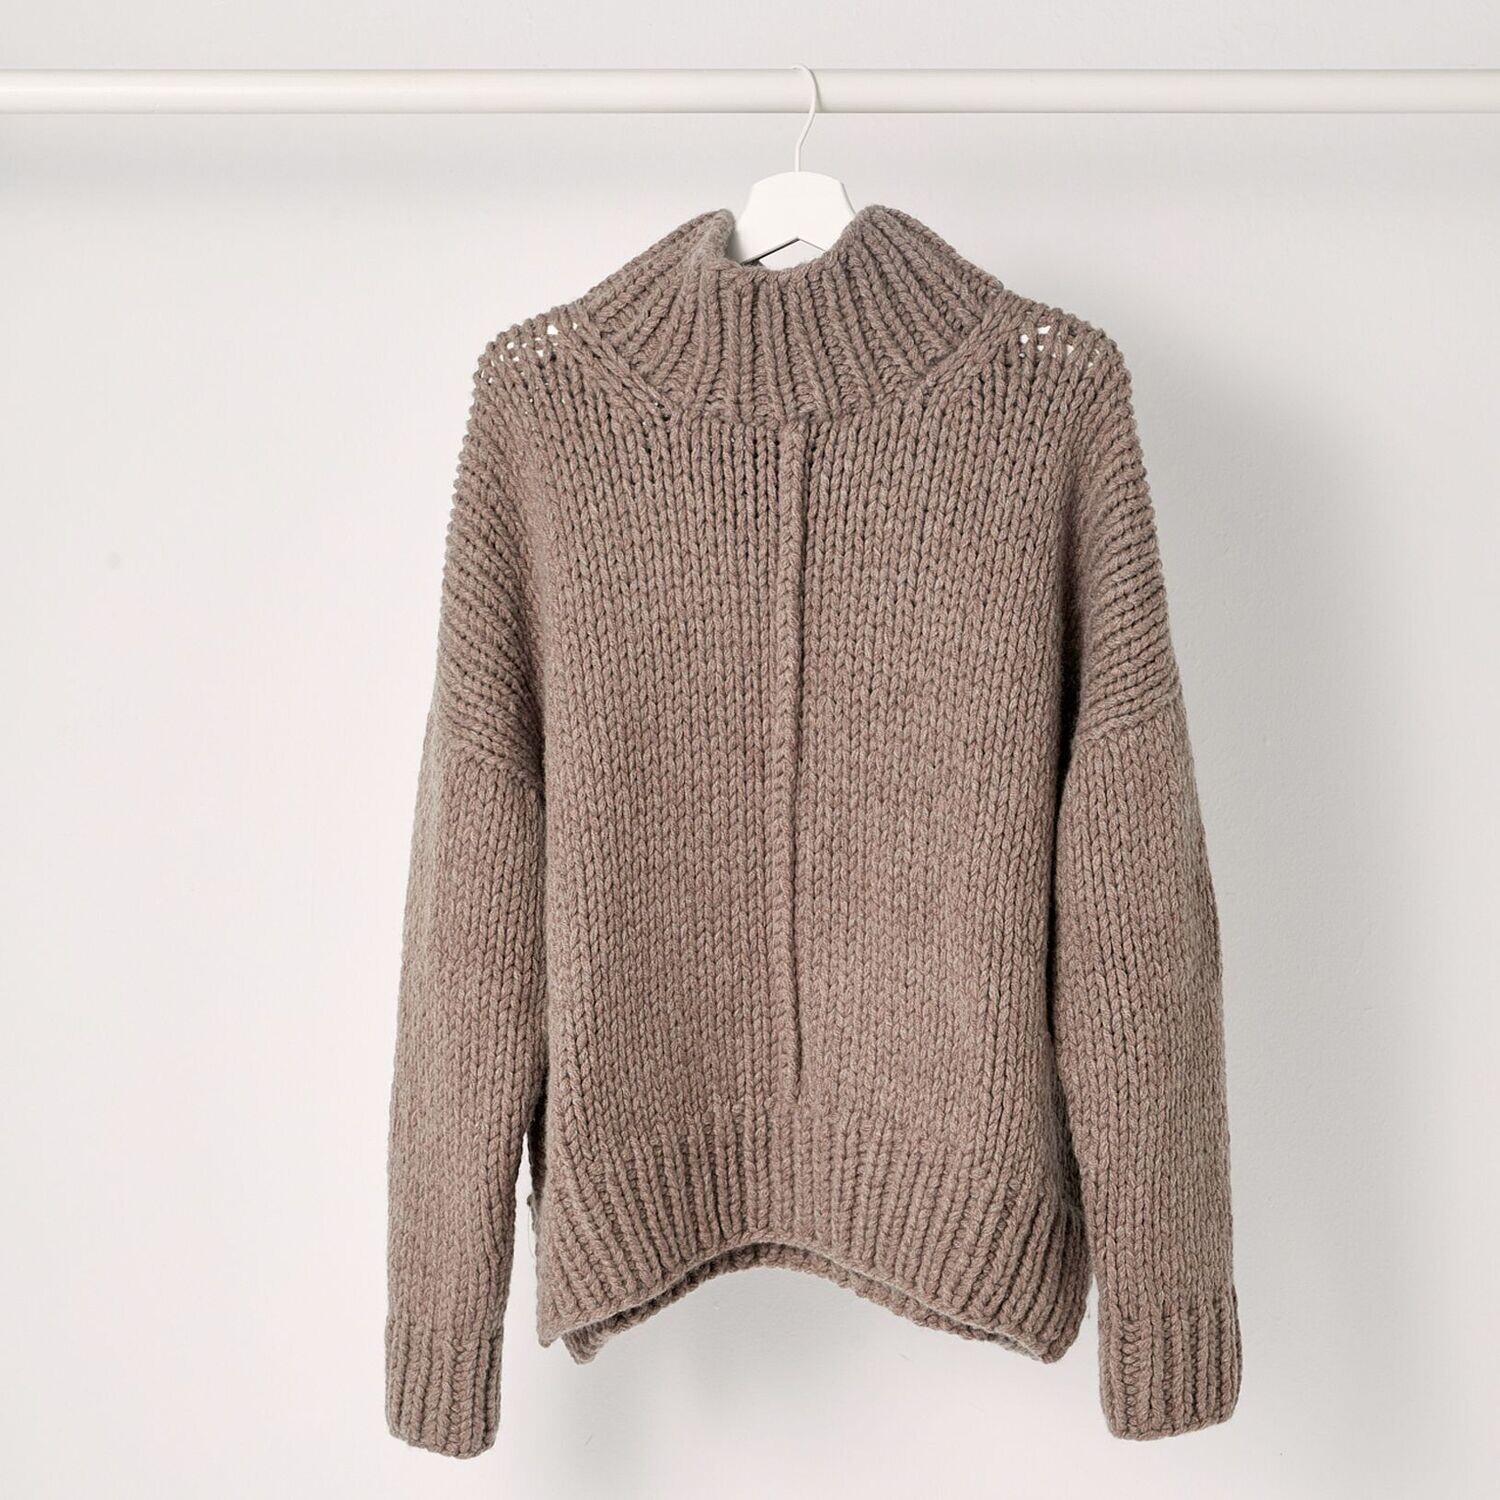 Oversize Turtleneck-Sweater MIA (Kaschmir-Mix), Farbe: schlamm, Größe: XS/S